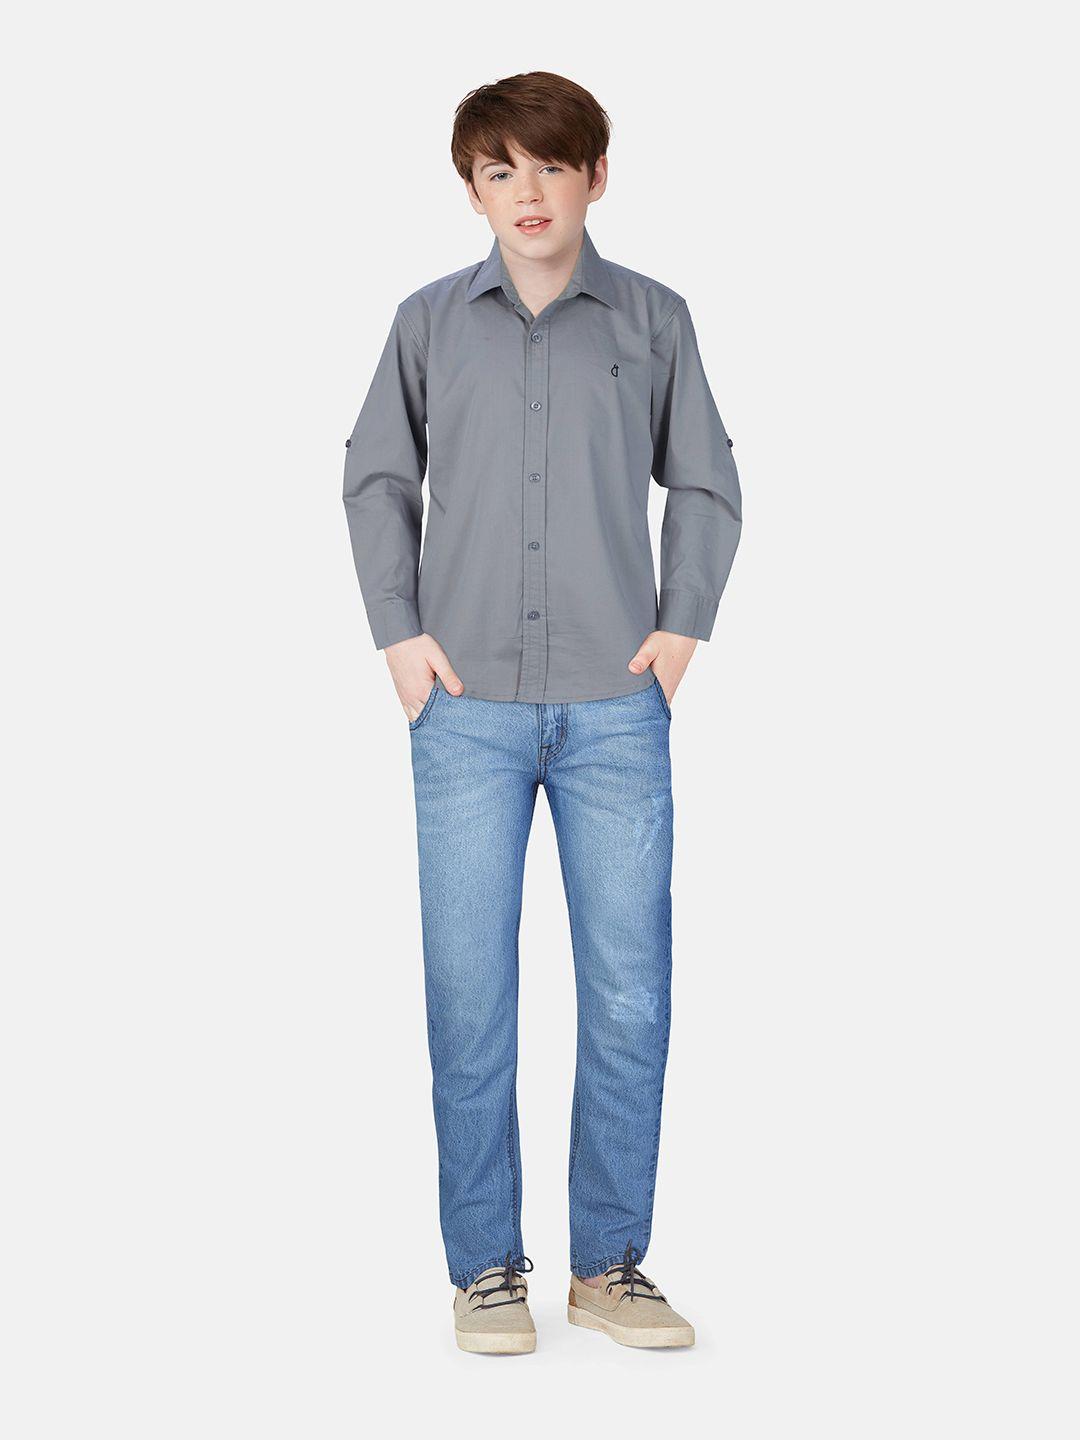 gini-and-jony-boys-grey-printed-casual-cotton-shirt